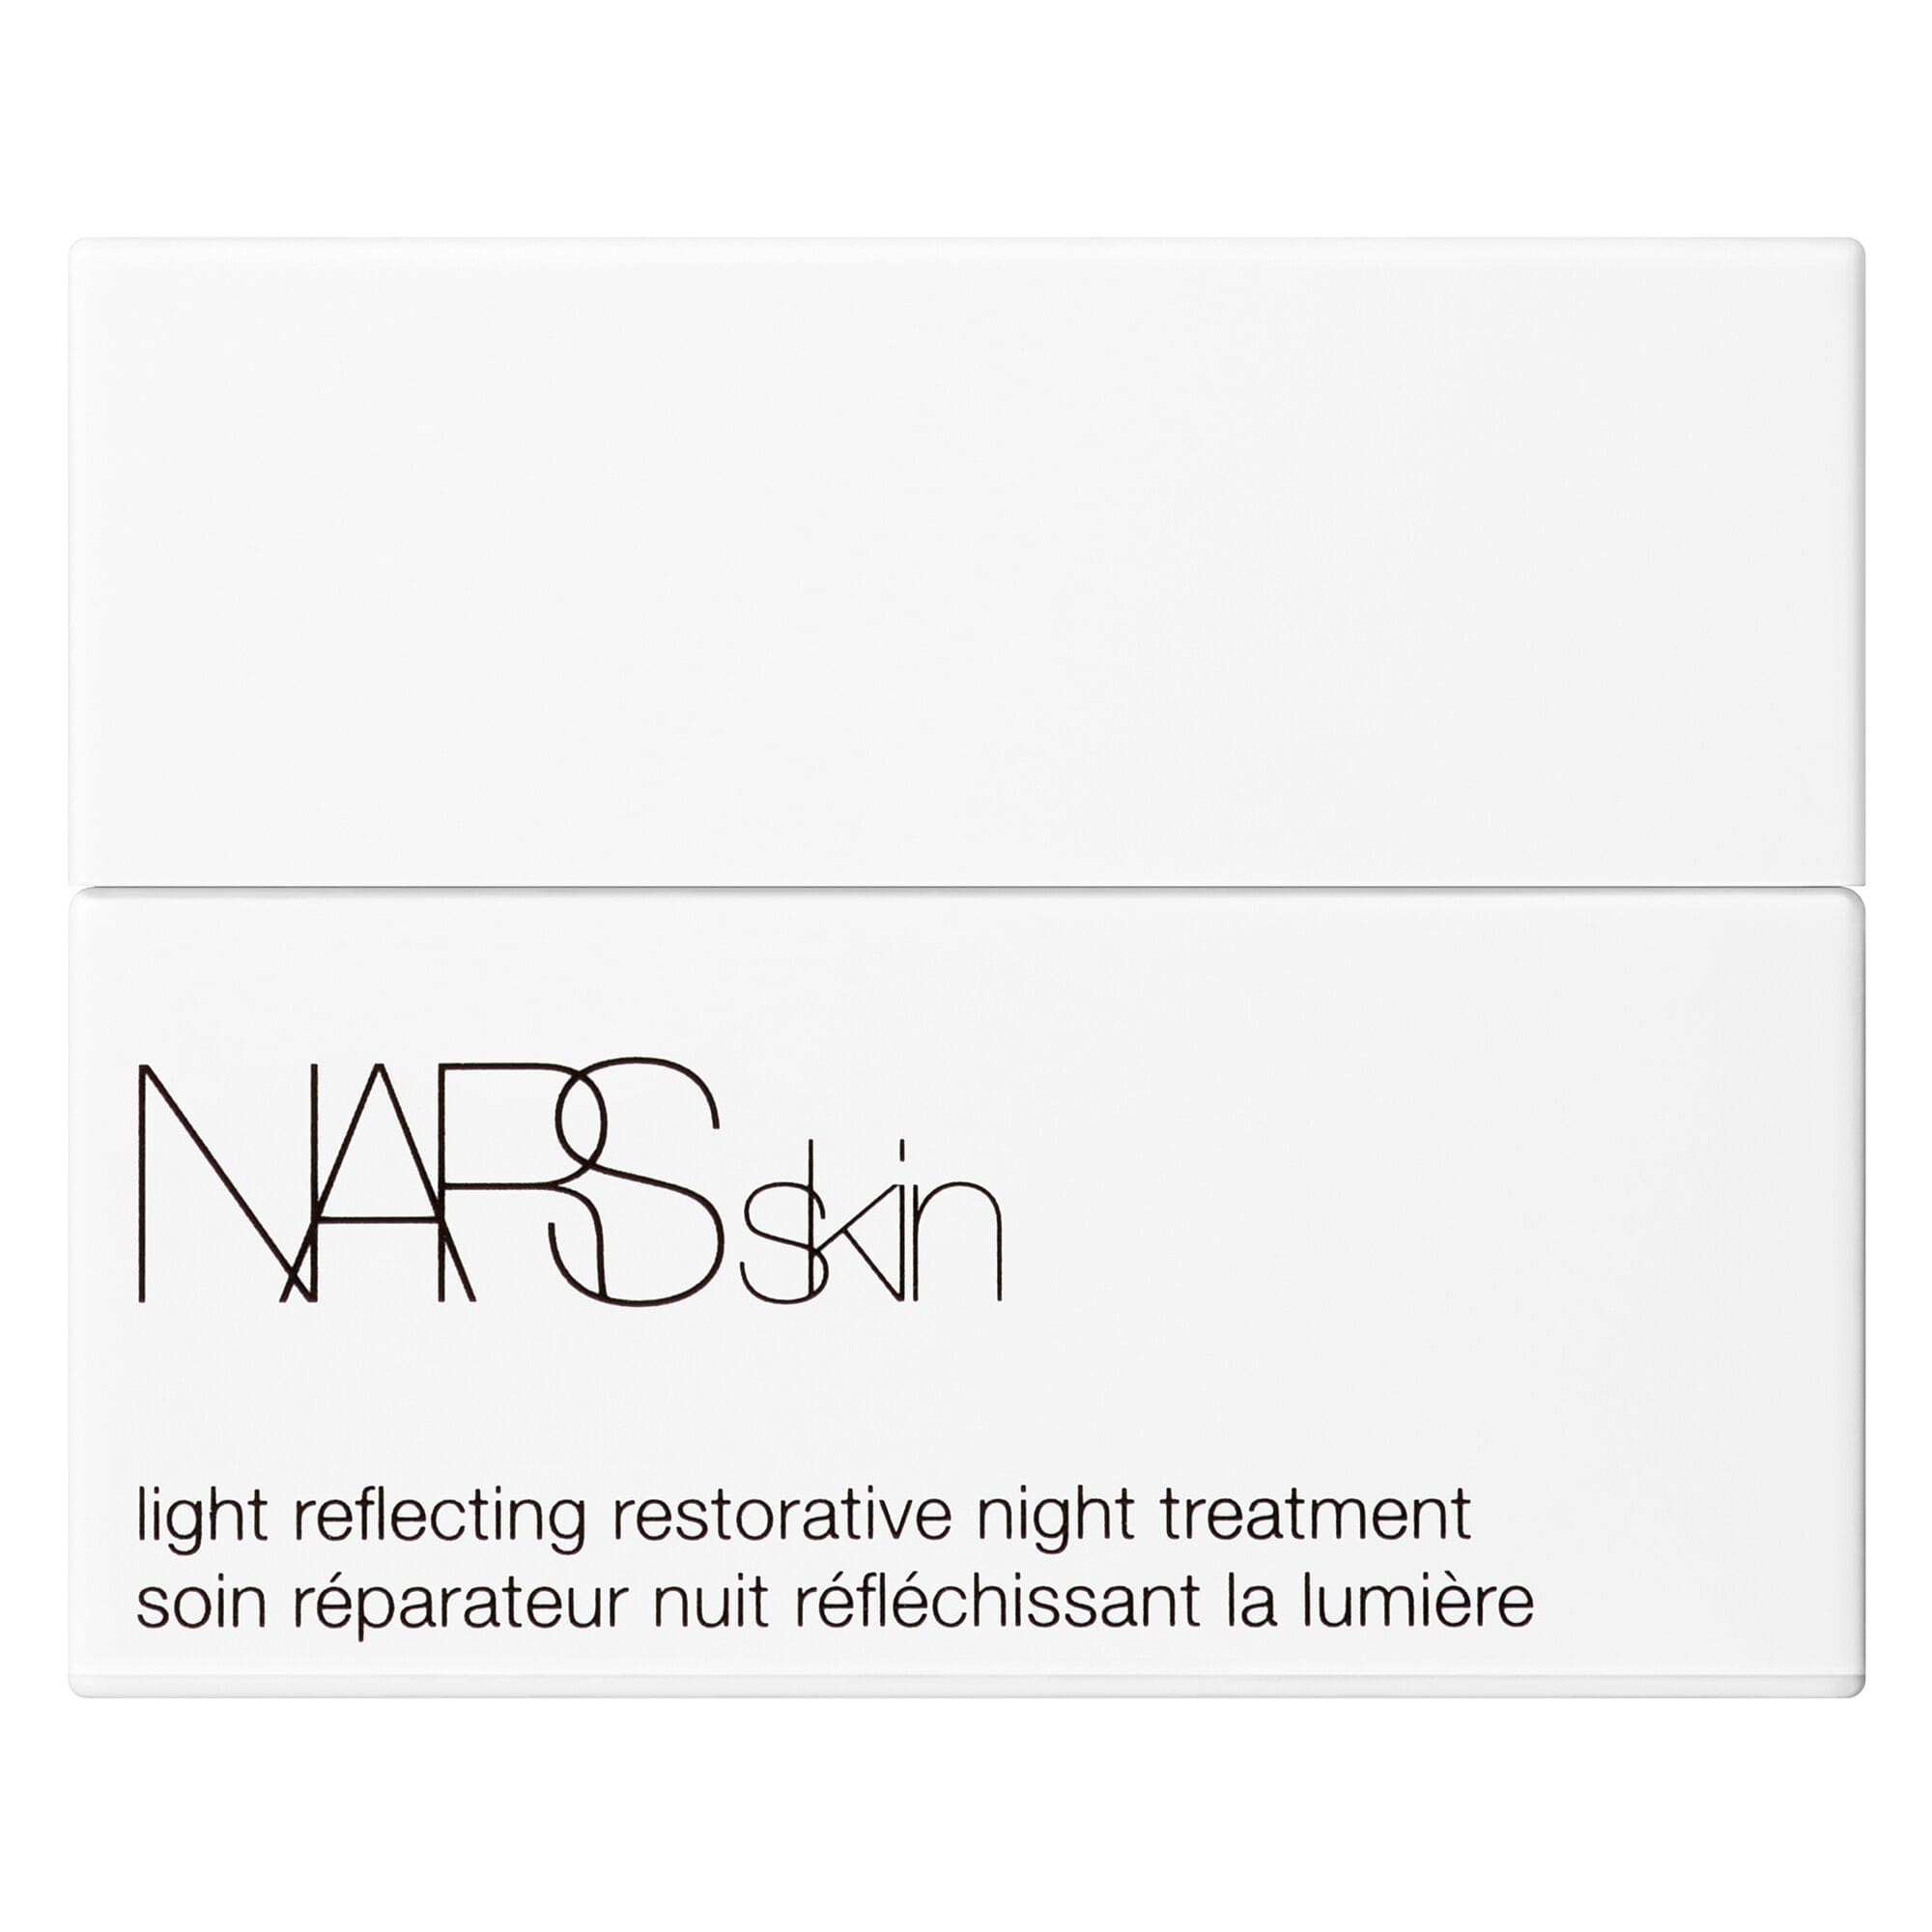 Nars Skin Light Reflecting Restorative Night Treatment